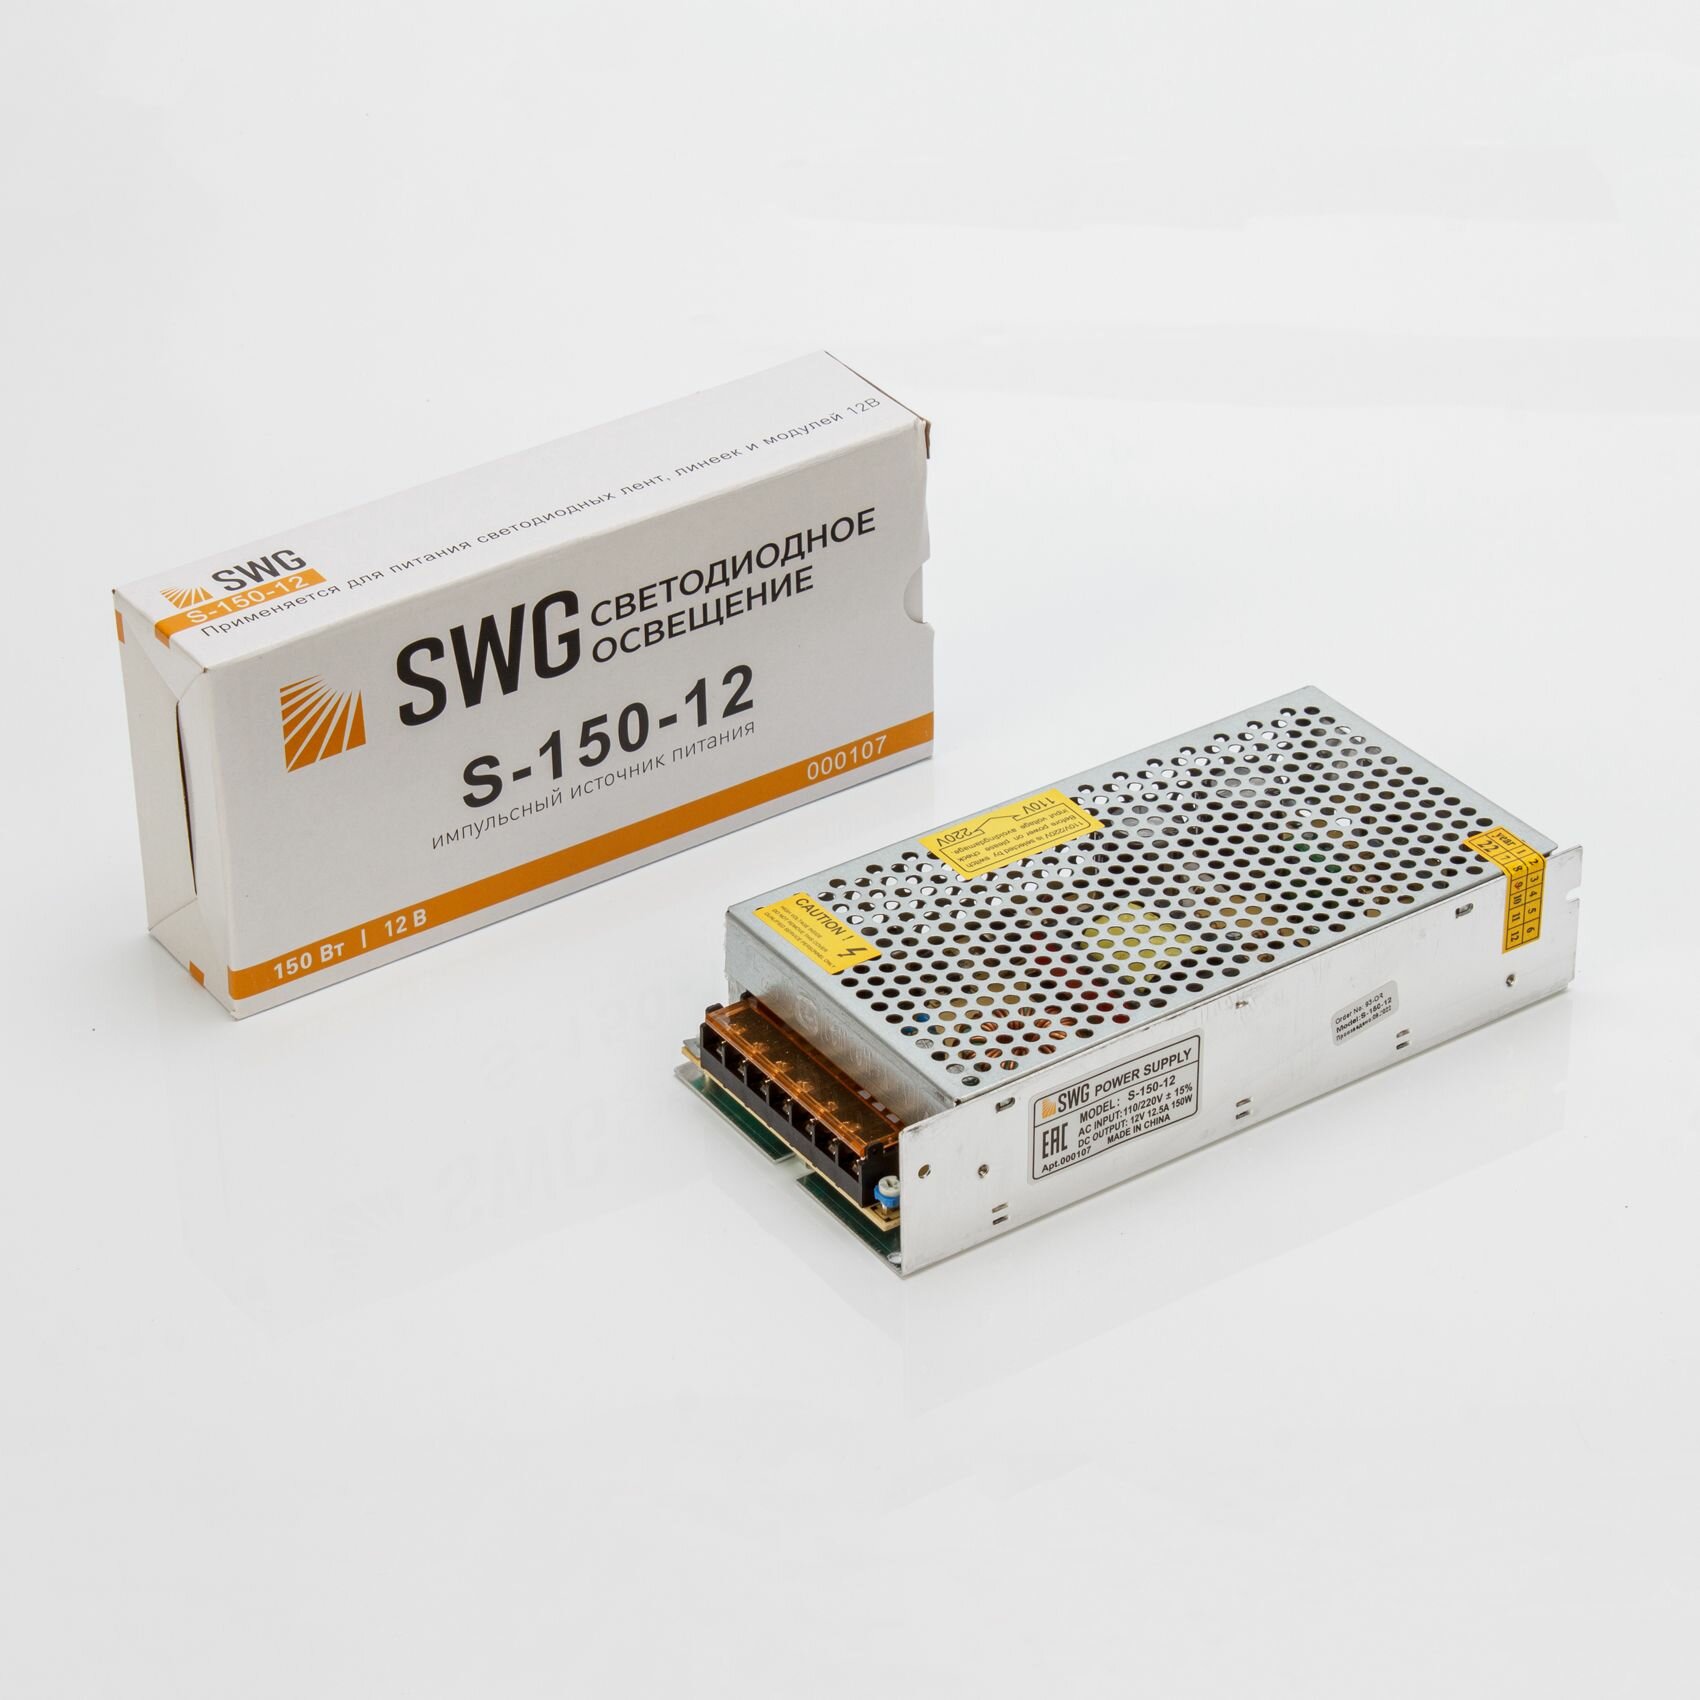 Блок питания SWG S-150-24, 150 W, 24V